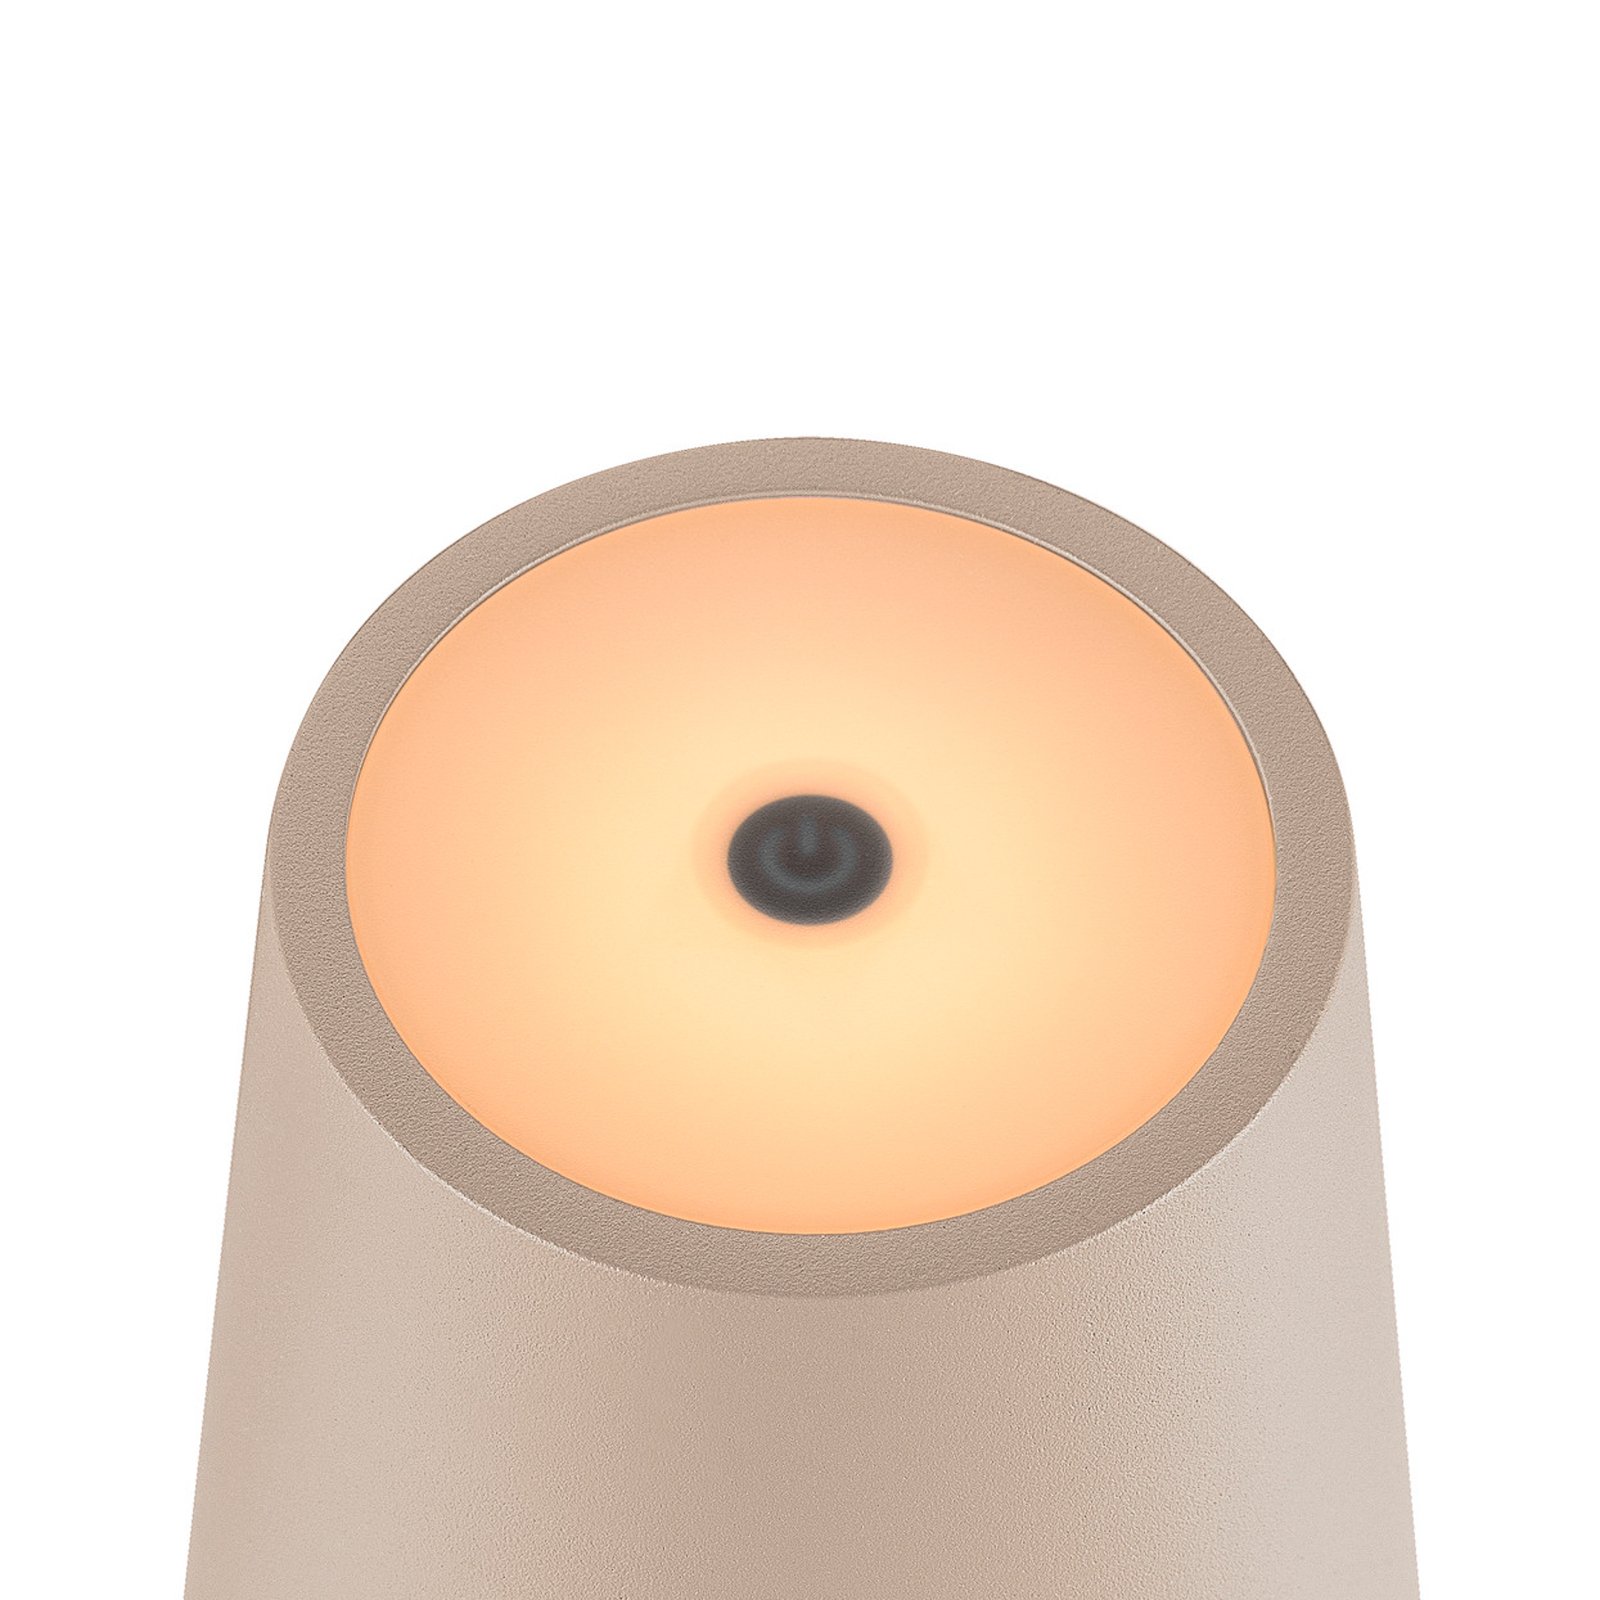 SLV LED genopladelig lampe Vinolina Two, beige, aluminium, Ø 11 cm, IP65